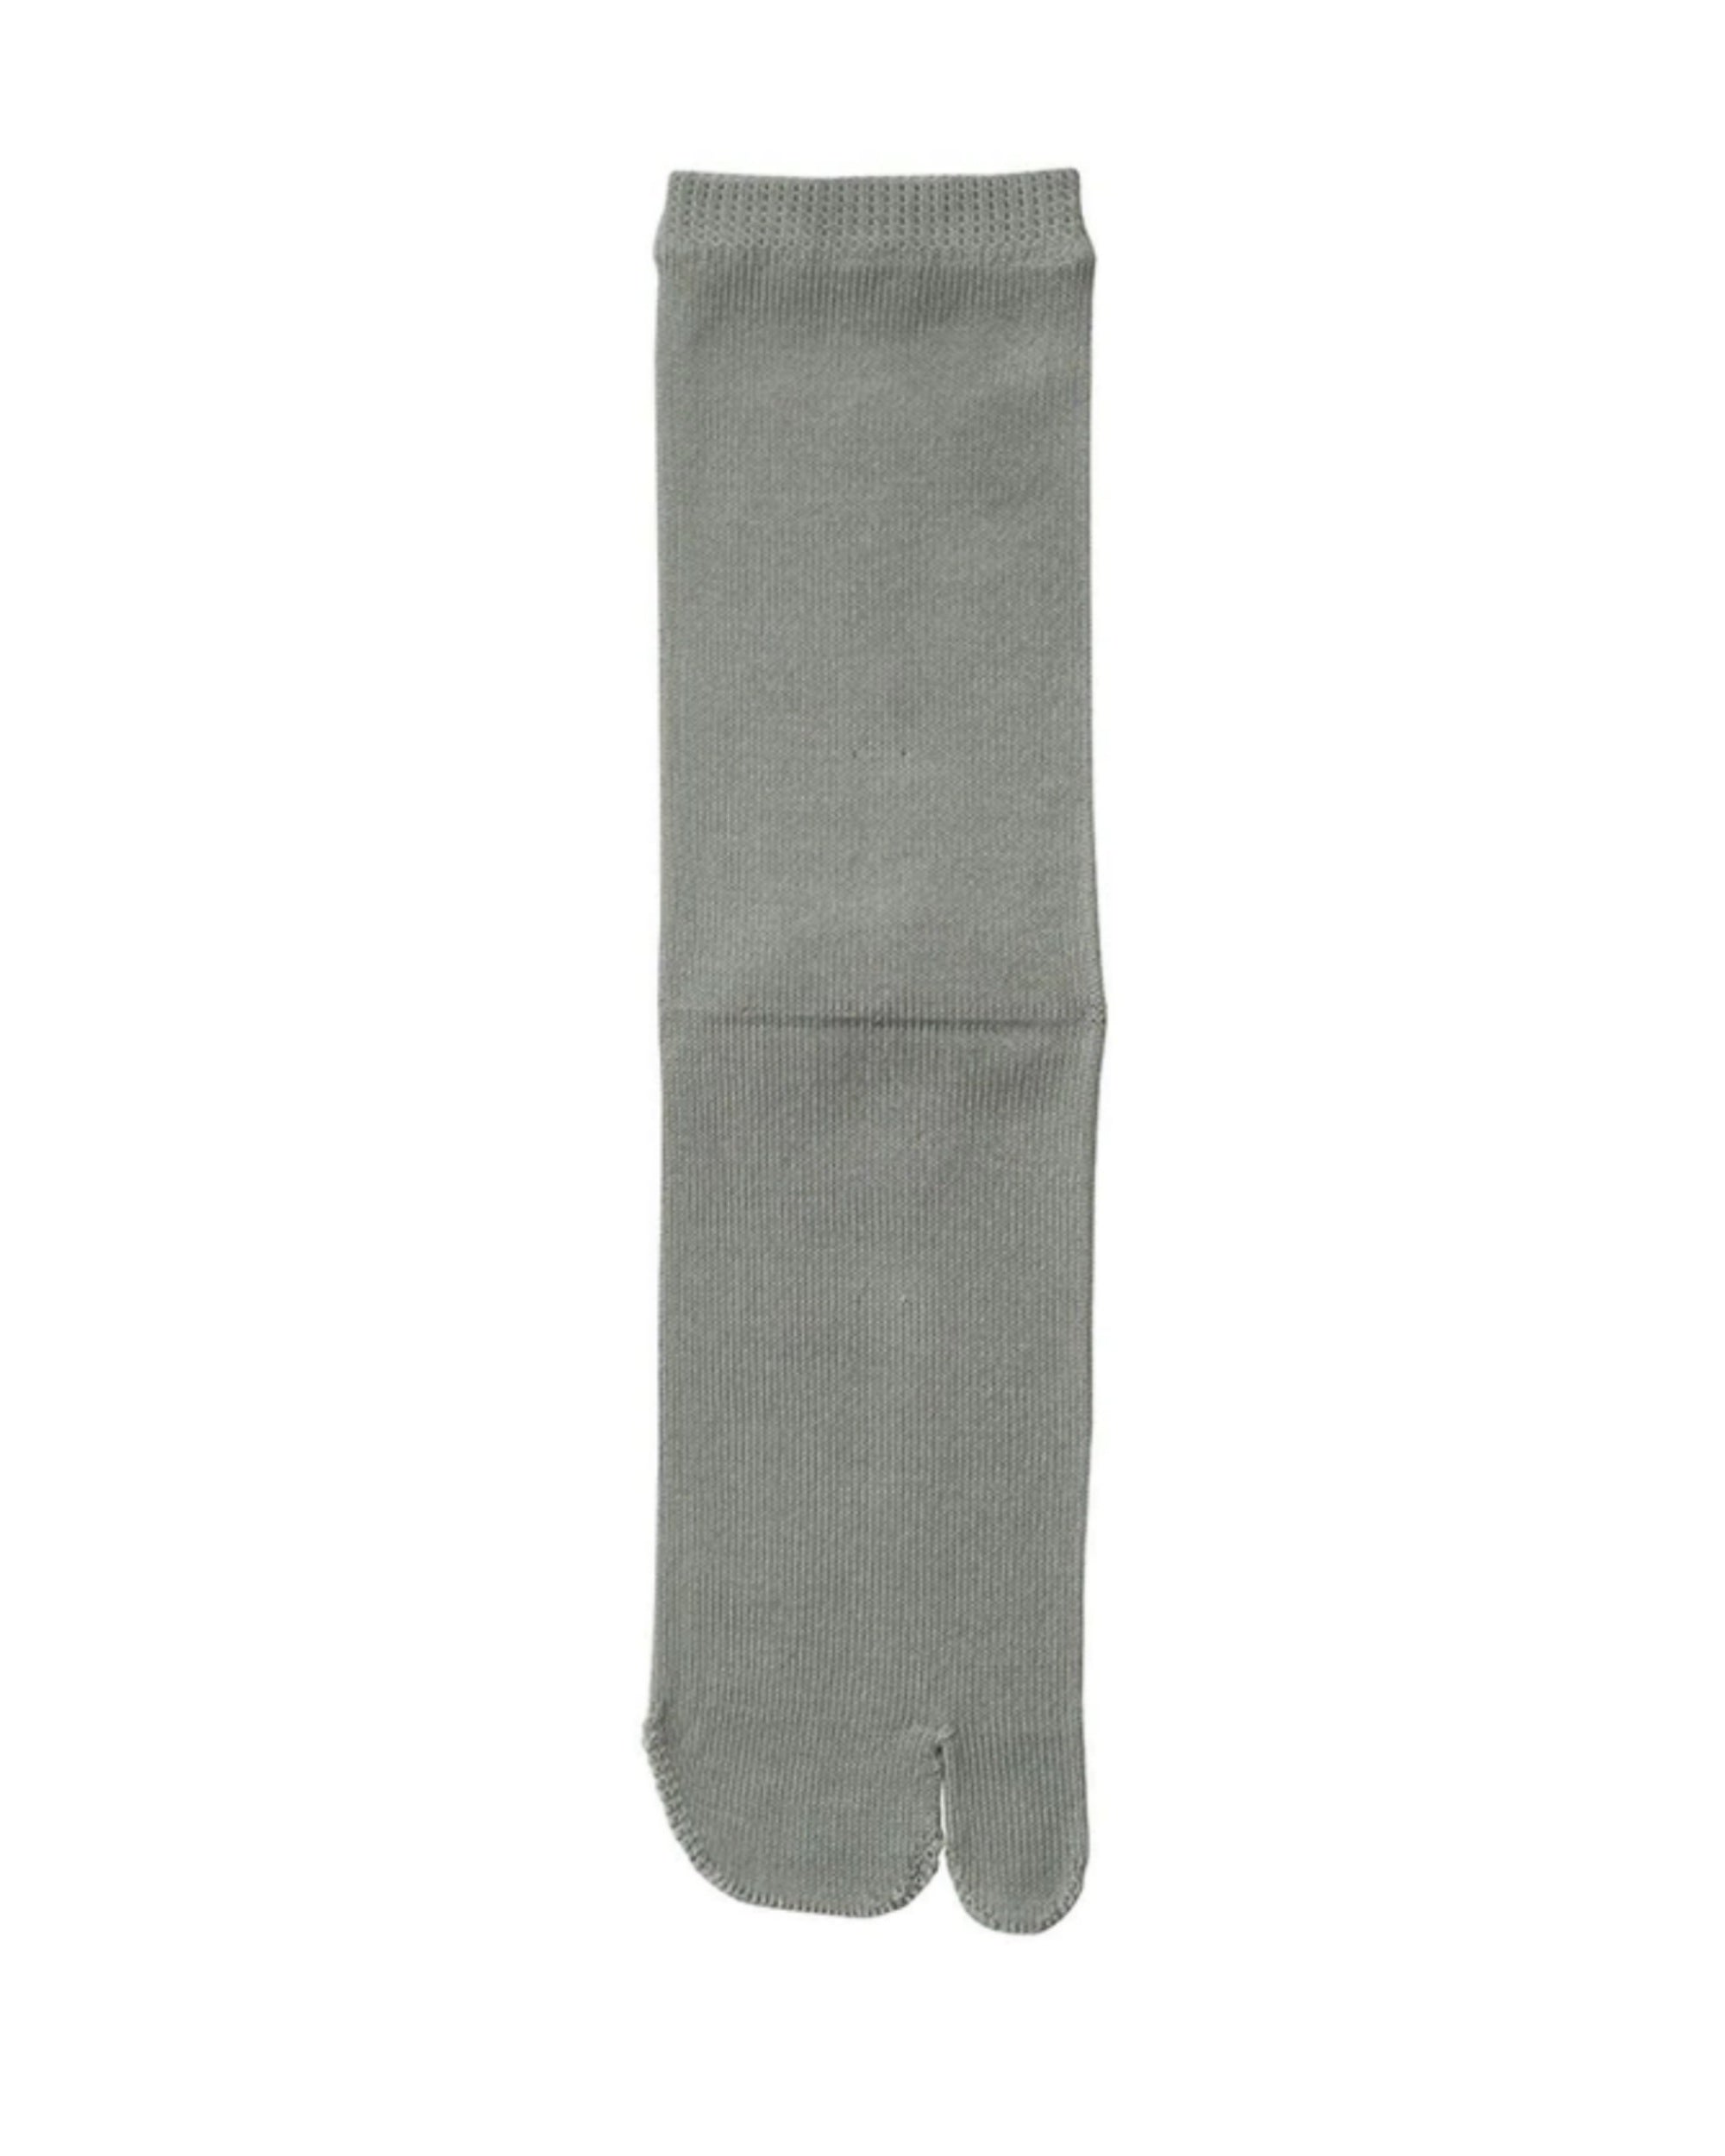 Egyption cotton tabi socks | the maker hobart